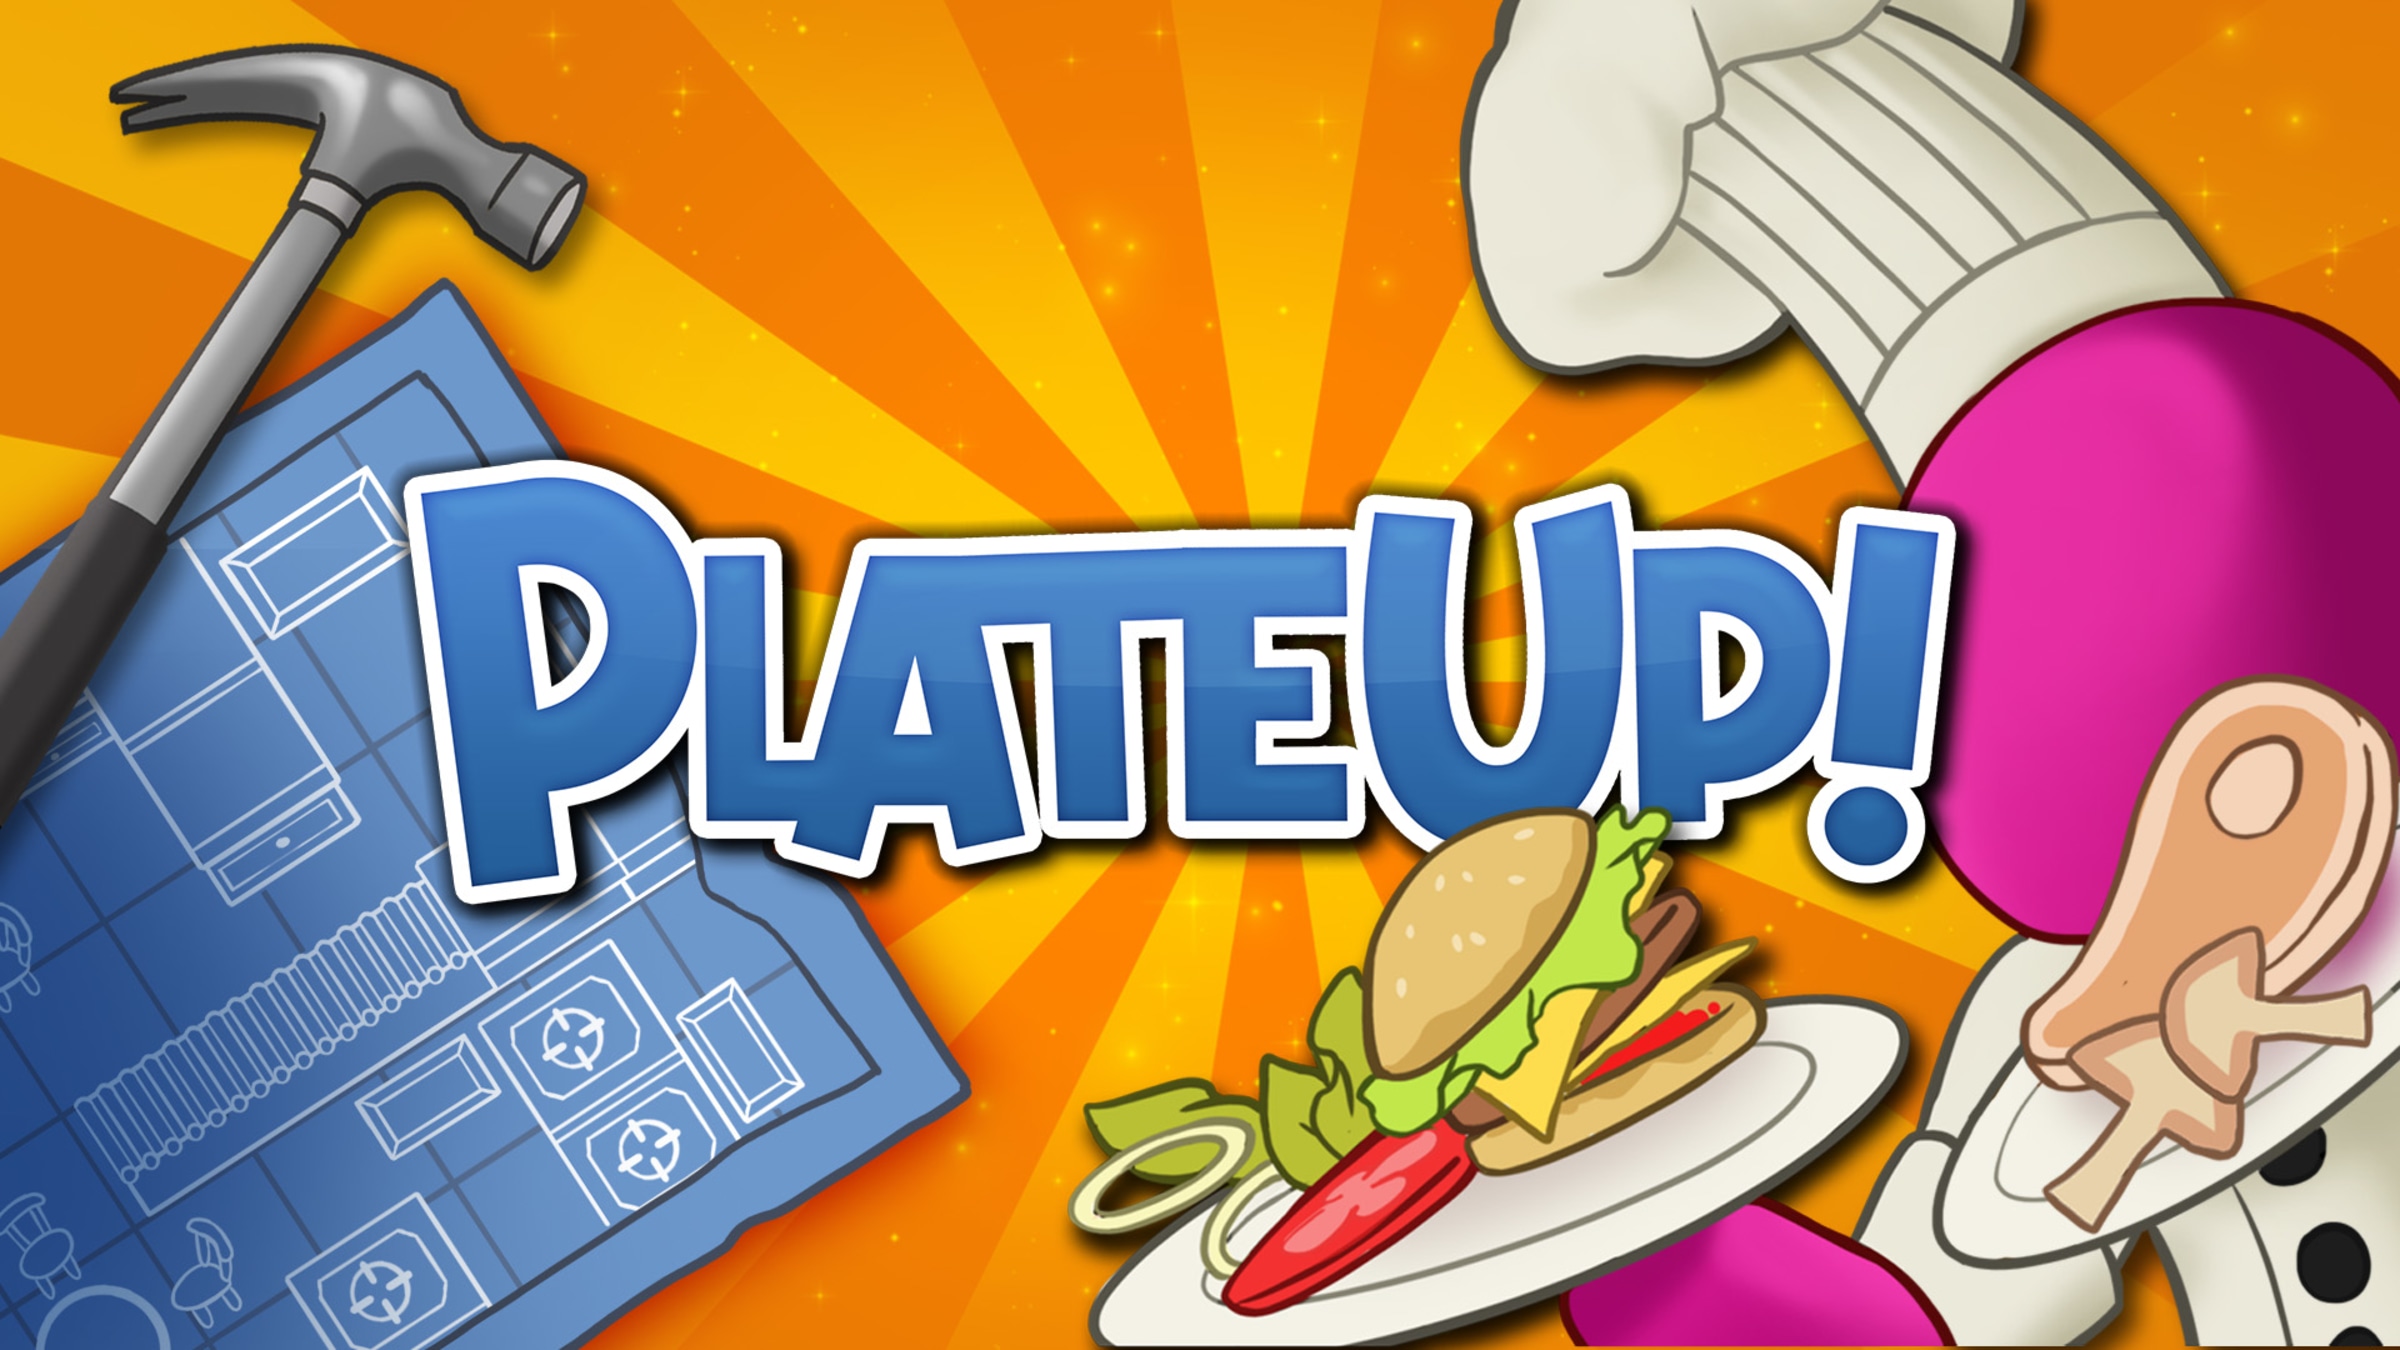 PlateUp PS5 Version Full Game Setup Free Download